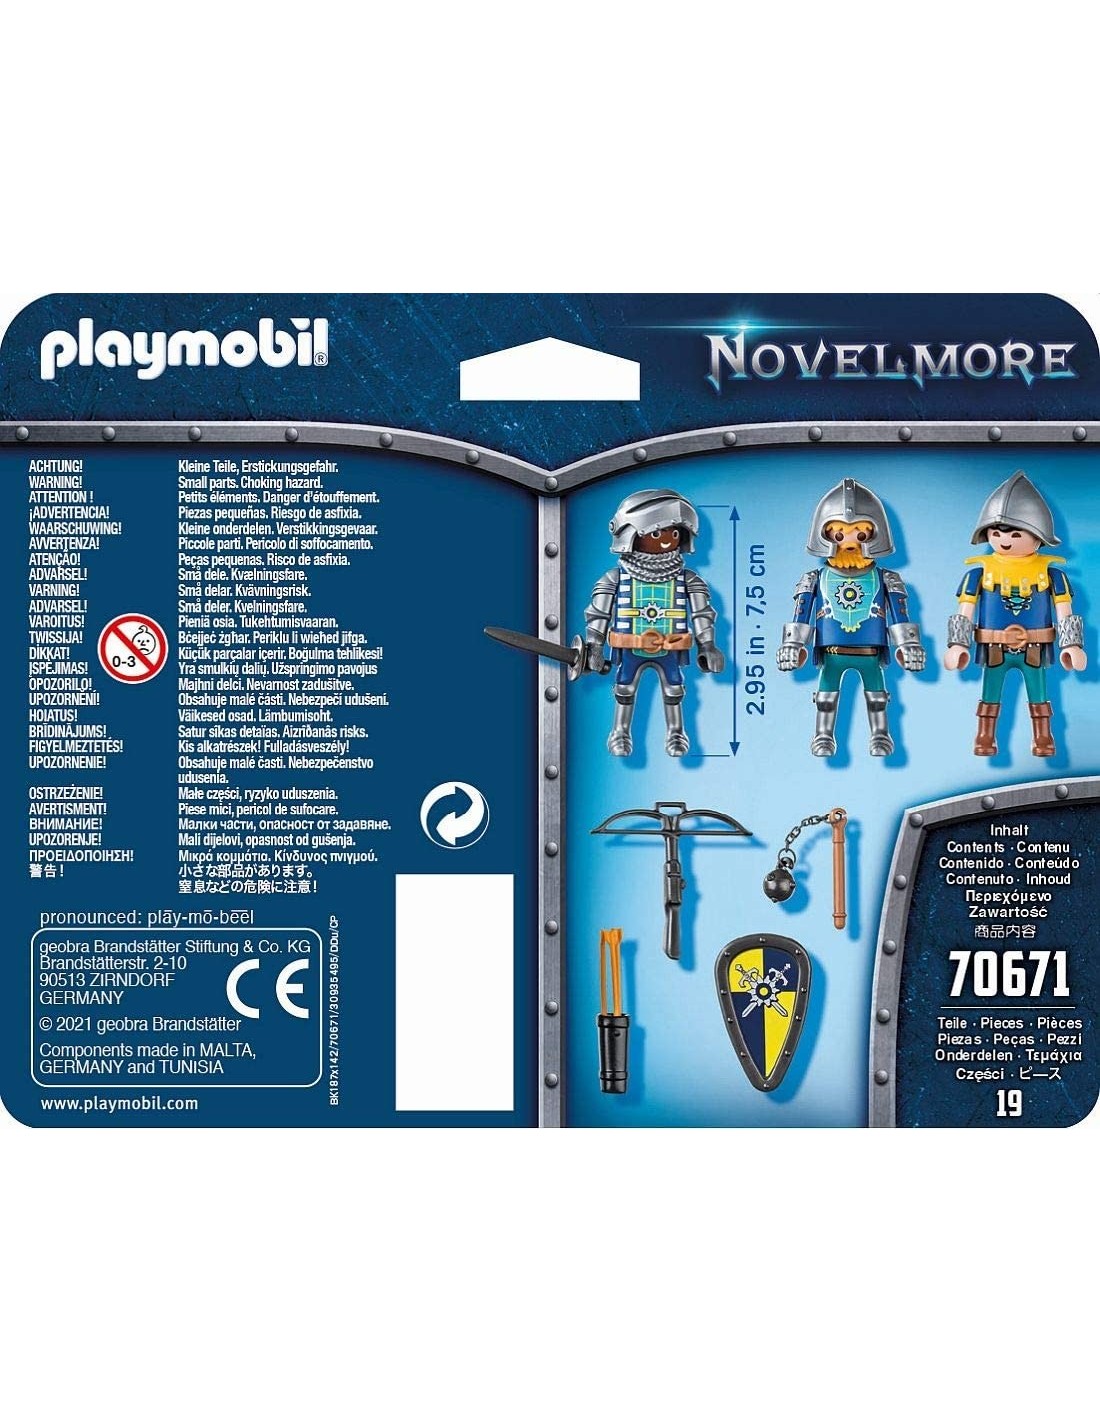 Playmobil Novelmore Ιππότες Του Novelmore 70671 - Playmobil, Playmobil Novelmore